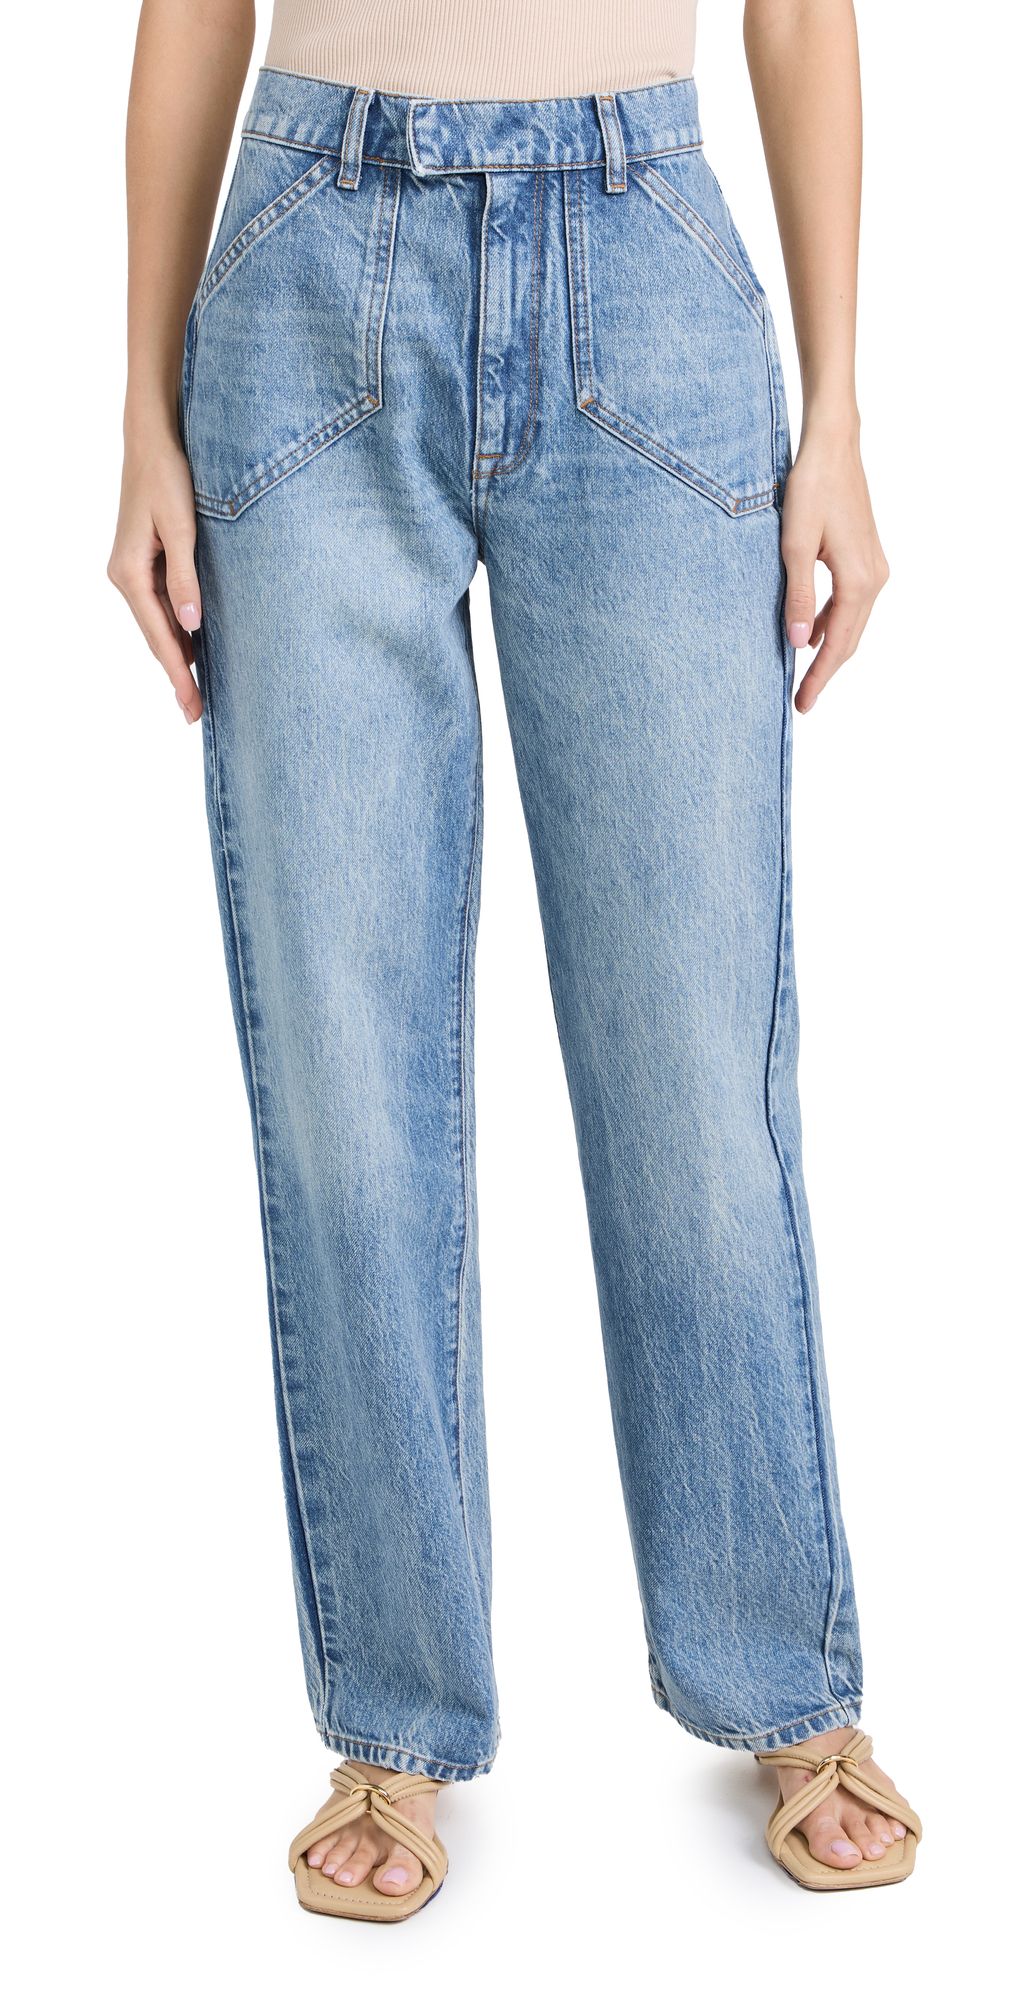 Triarchy Ms. Keaton Farmstand Jeans | Shopbop